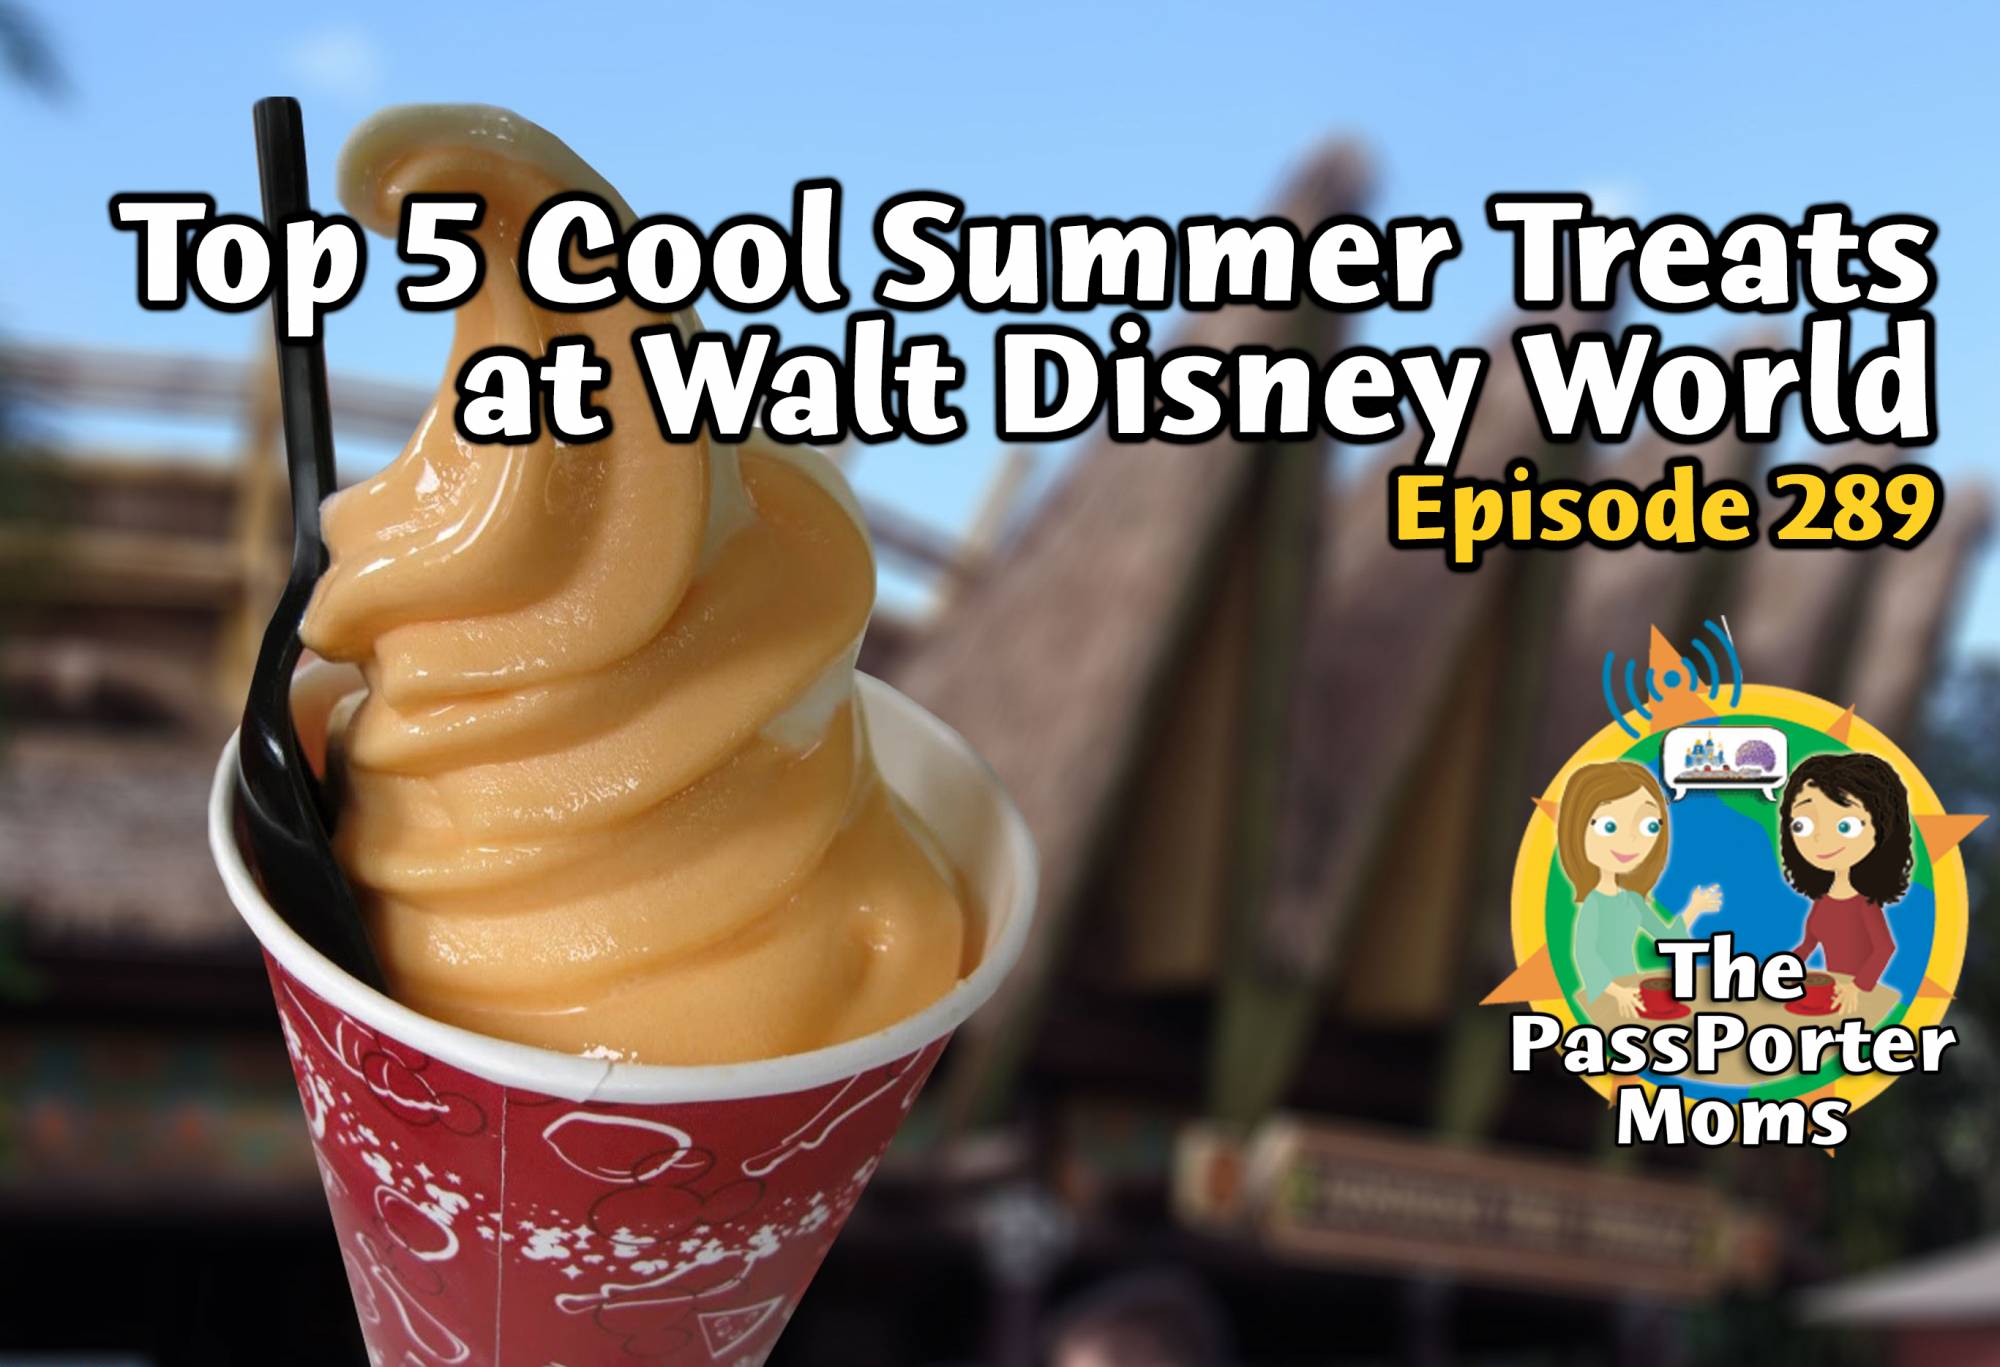 Our top five summer treats at Walt Disney World